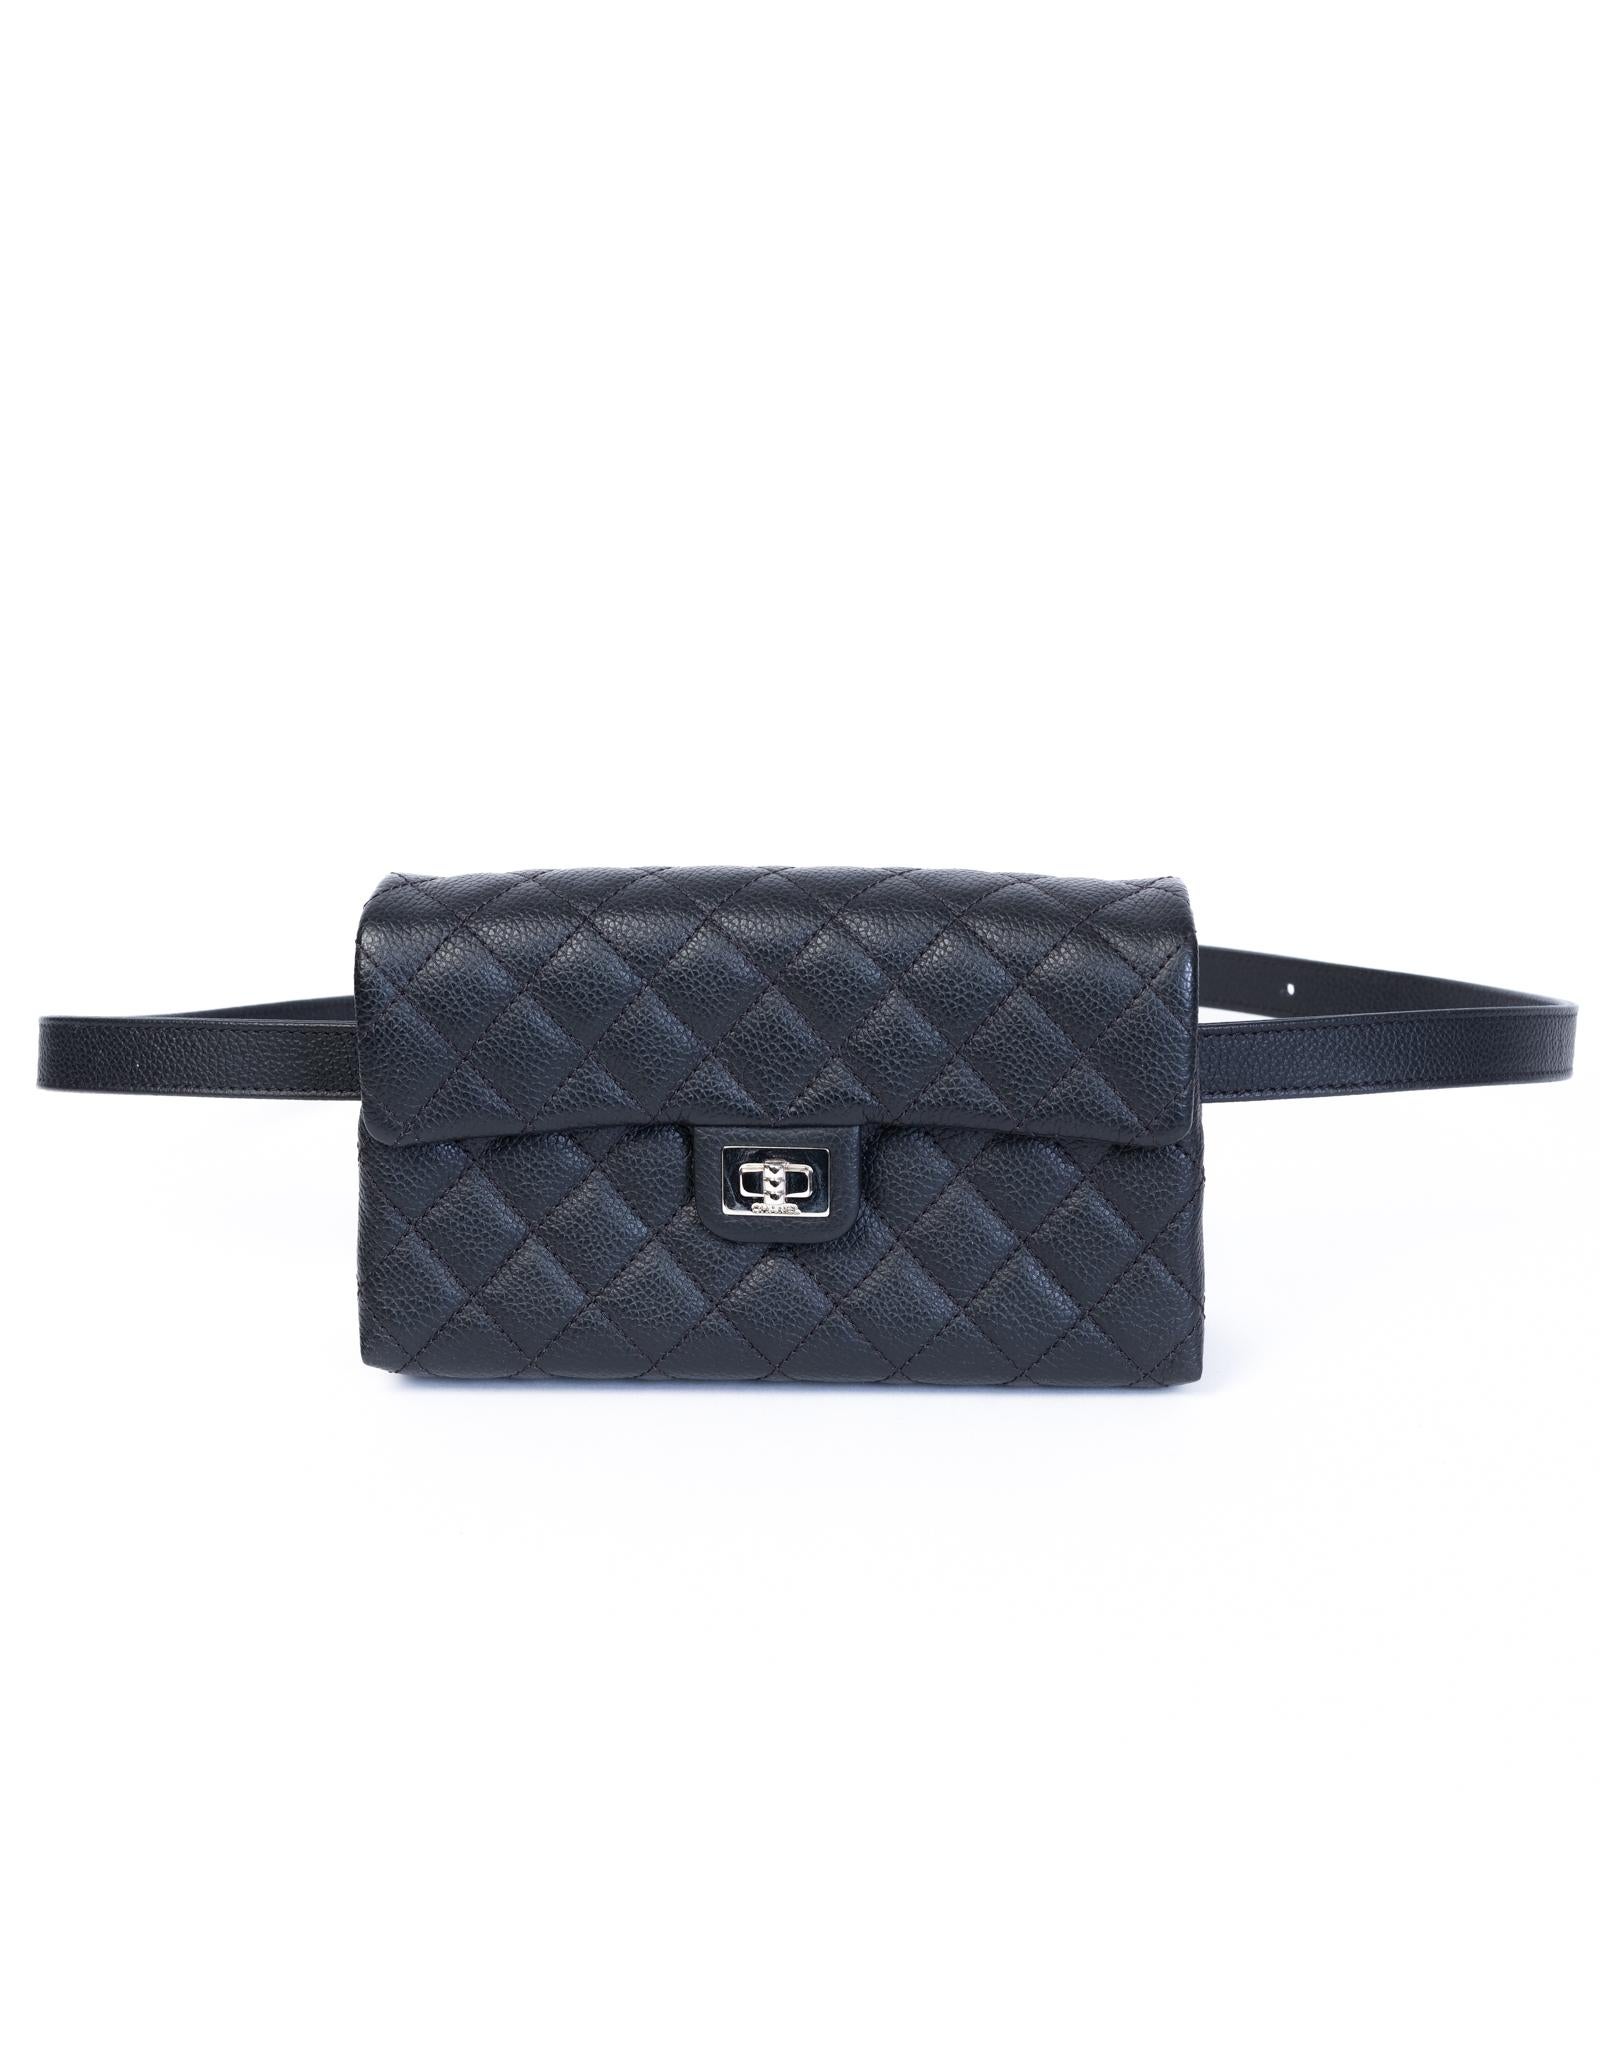 Chanel Black Caviar Leather Employee Reissue Fanny Pack Belt Bag 1